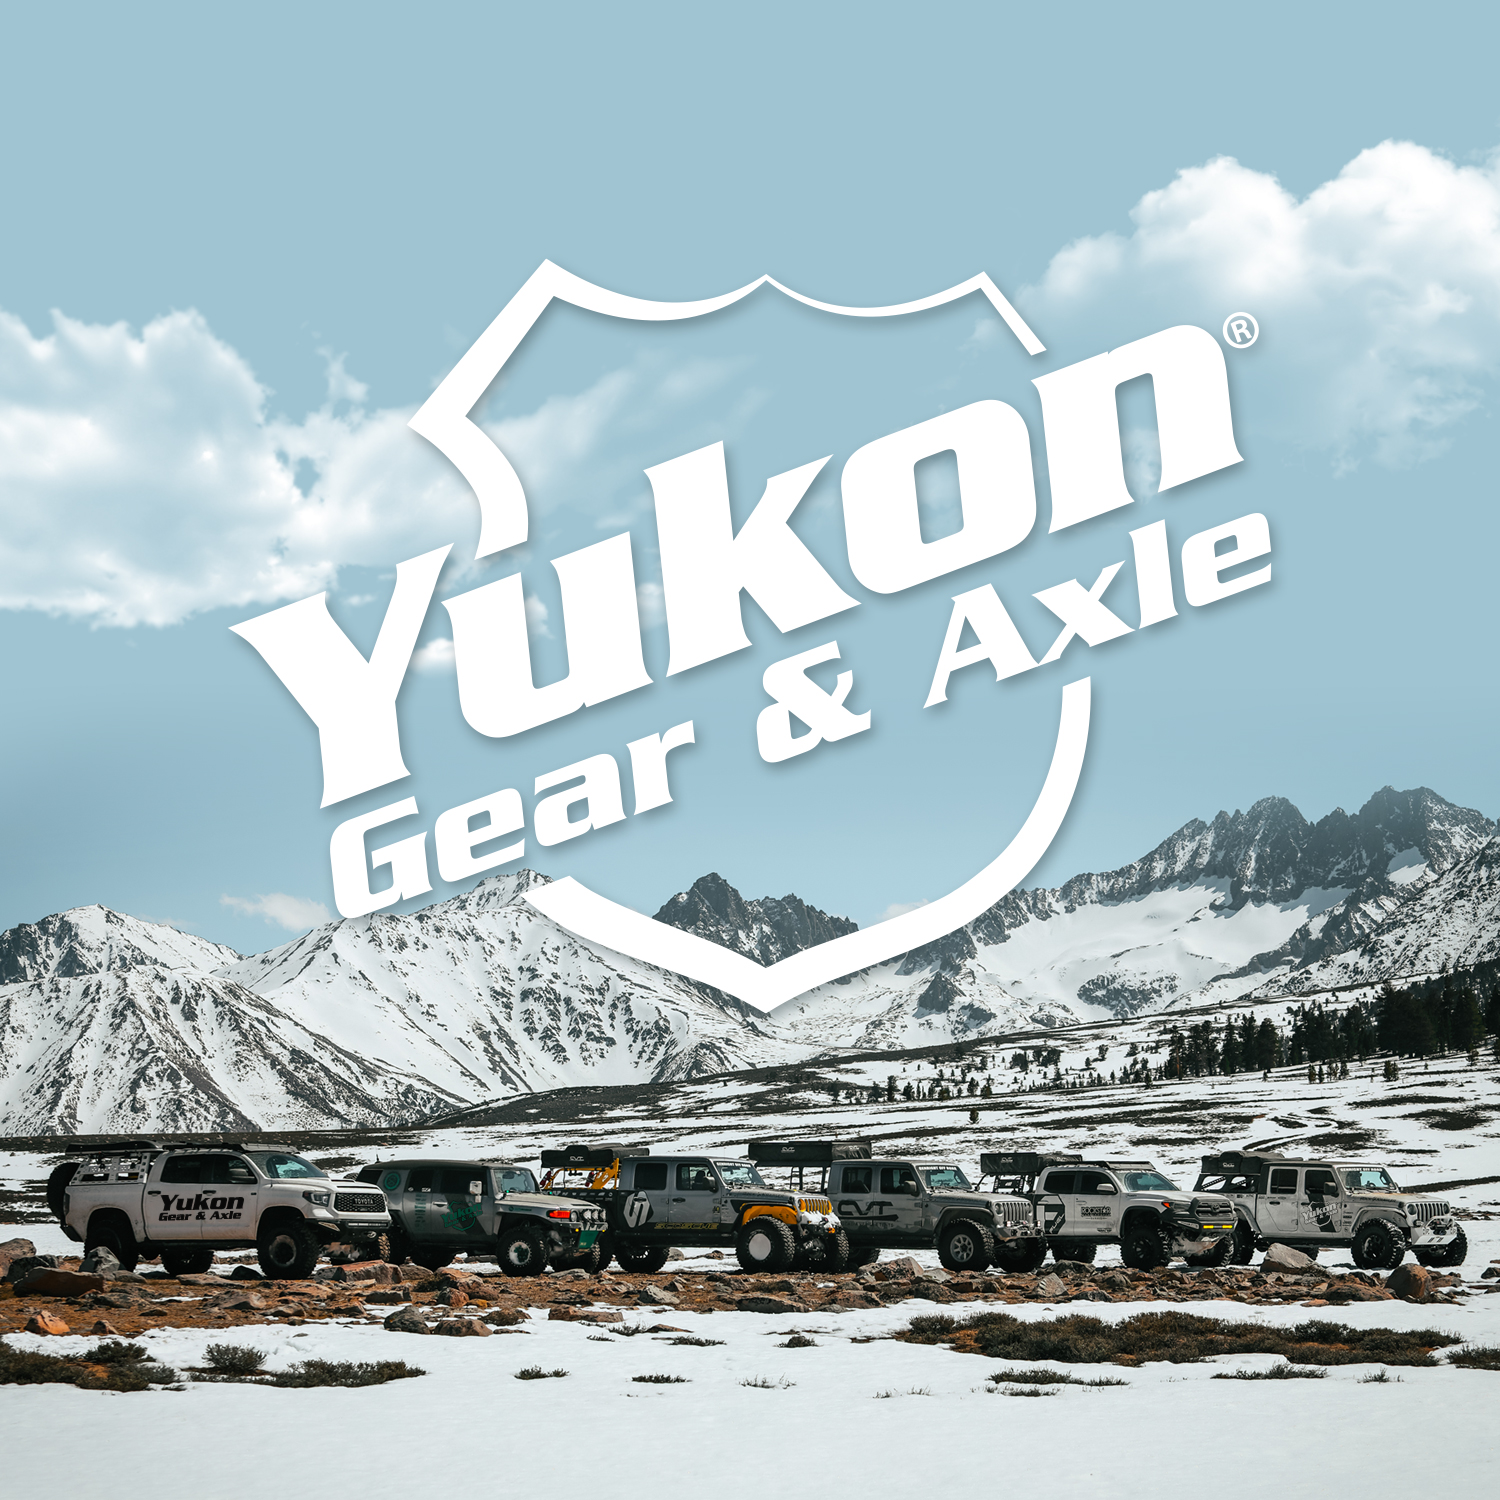 Yukon high performance replacement ring & pinion gear set, Dana 70, 4.56 ratio 